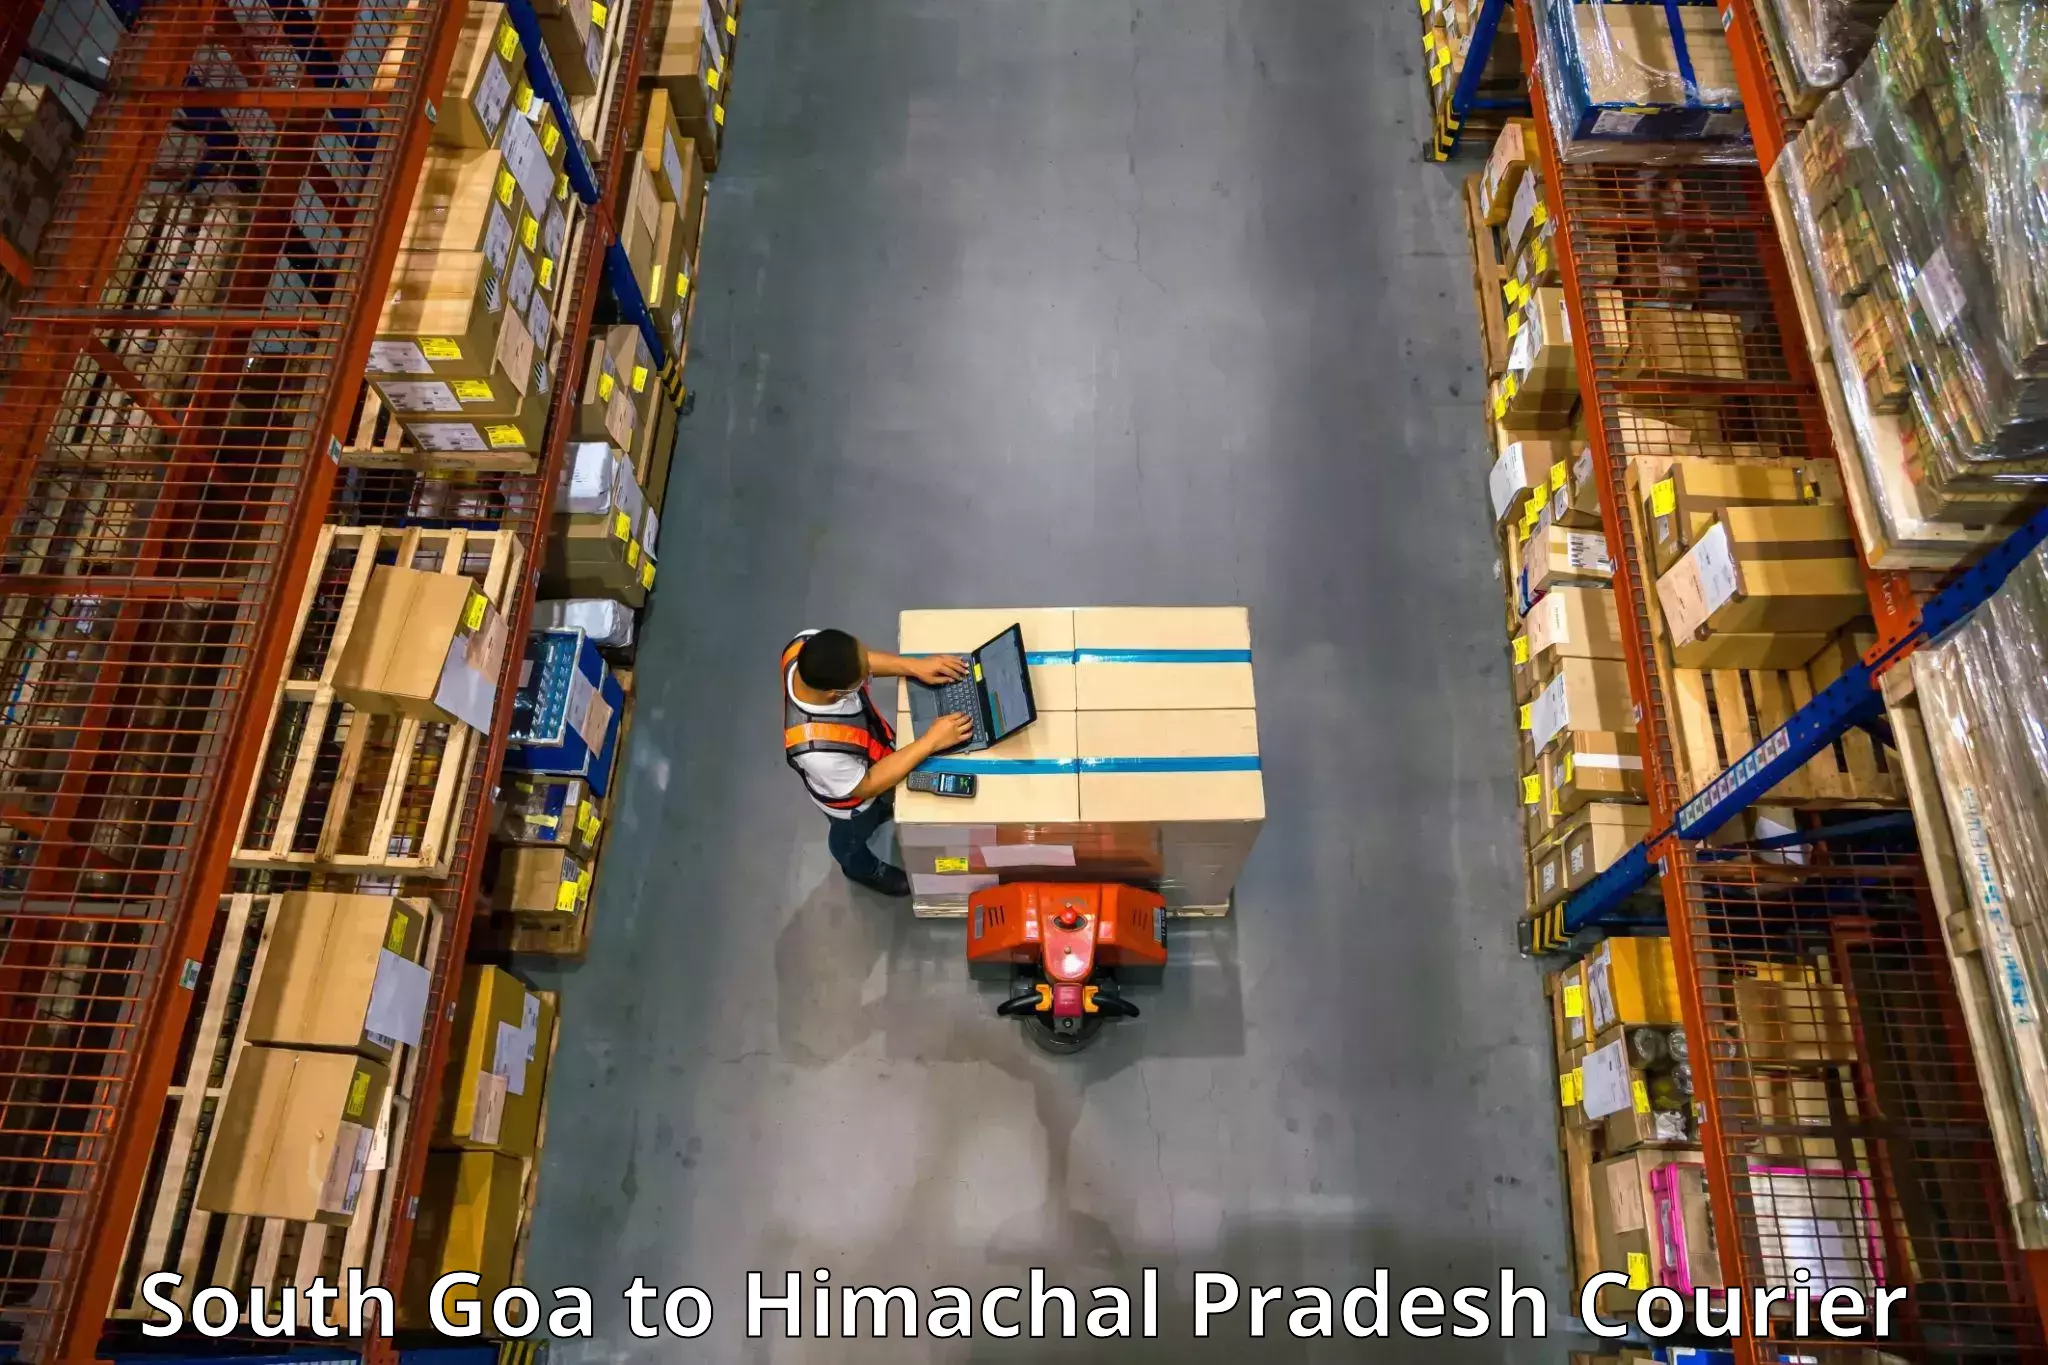 Professional movers and packers South Goa to Ratnari Shimla